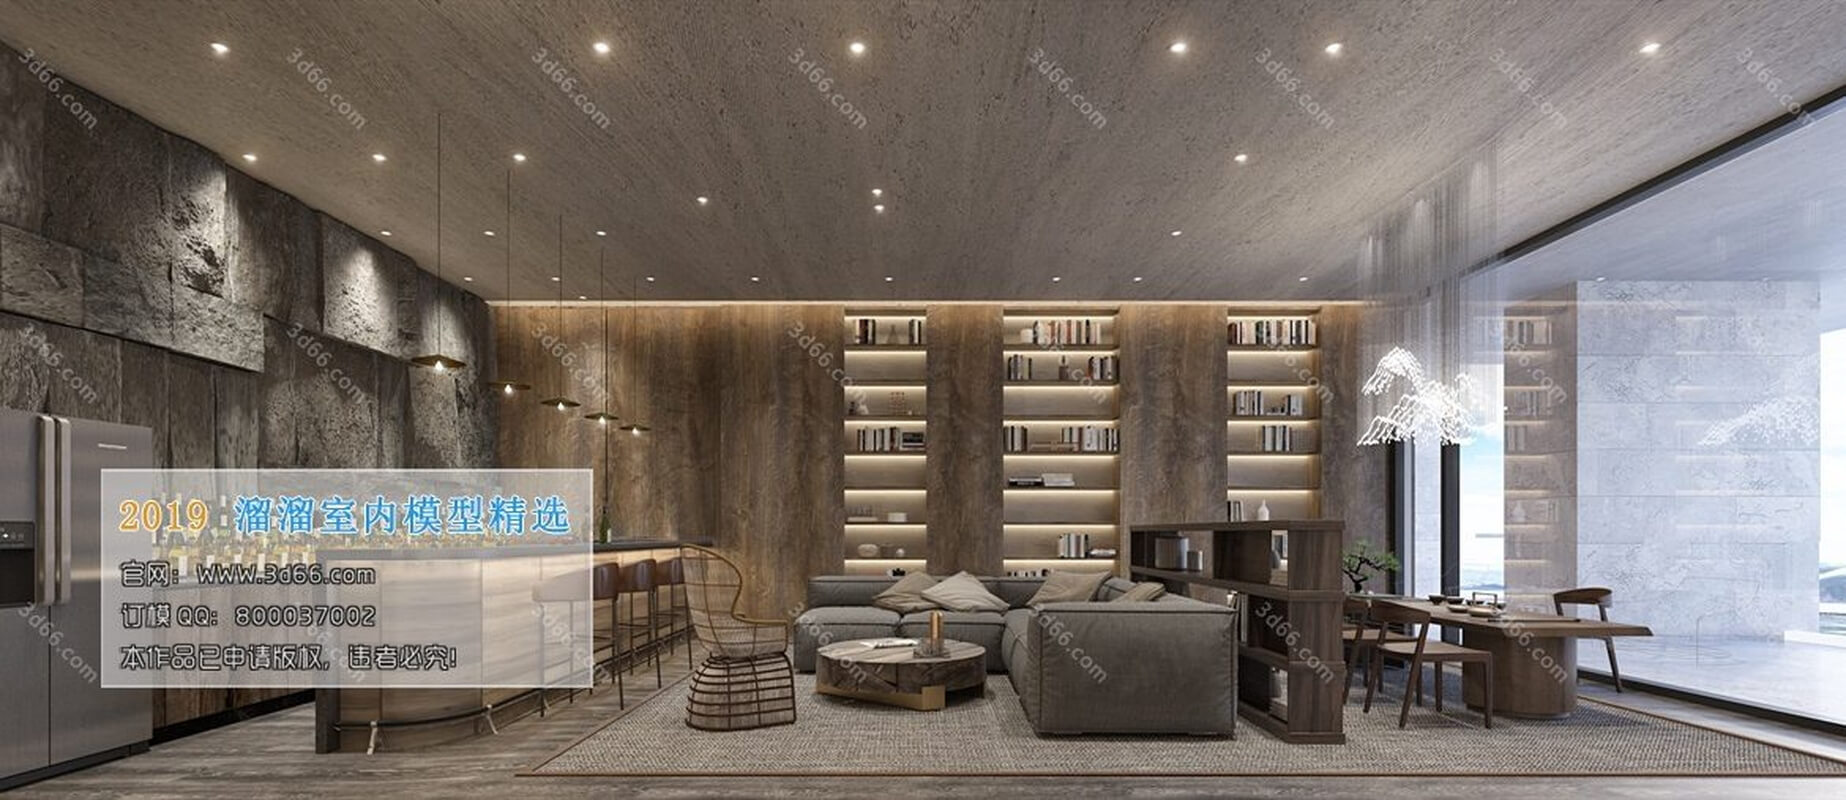 3D66 Club House Interior 2019 Style (02)